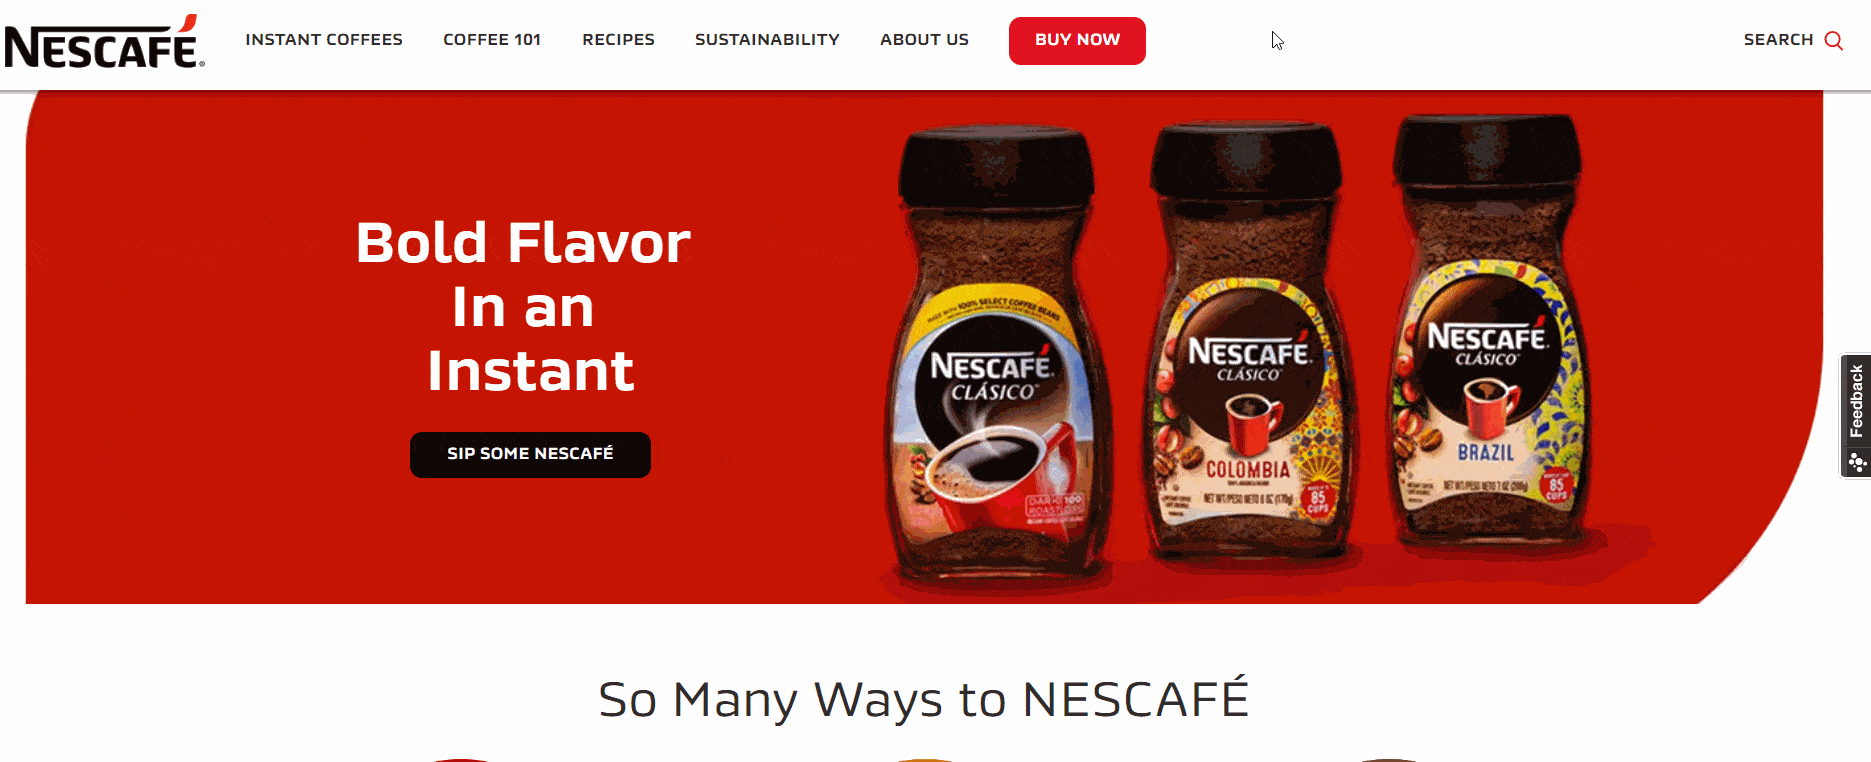 Nescafe internationalized websites